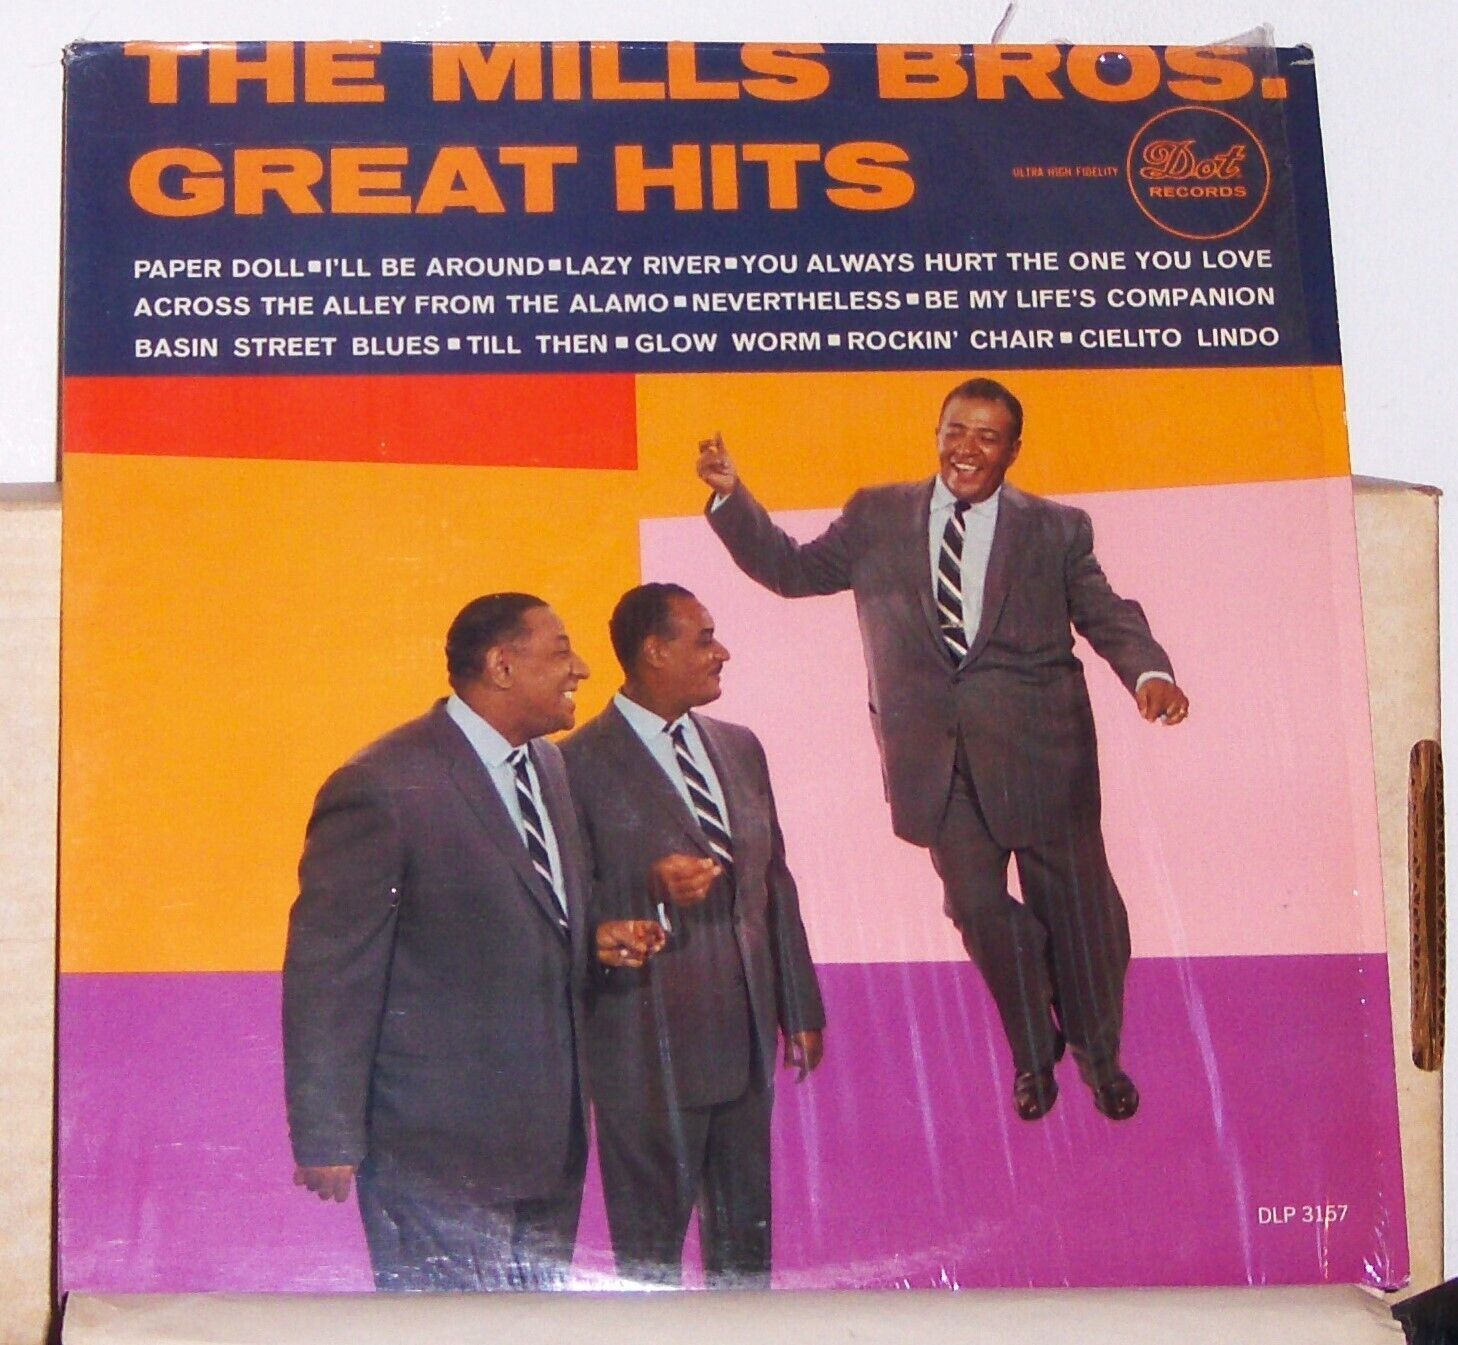 The Mills Brothers – Great Hits - 1959 Mono Vinyl LP Record Album - Excellent